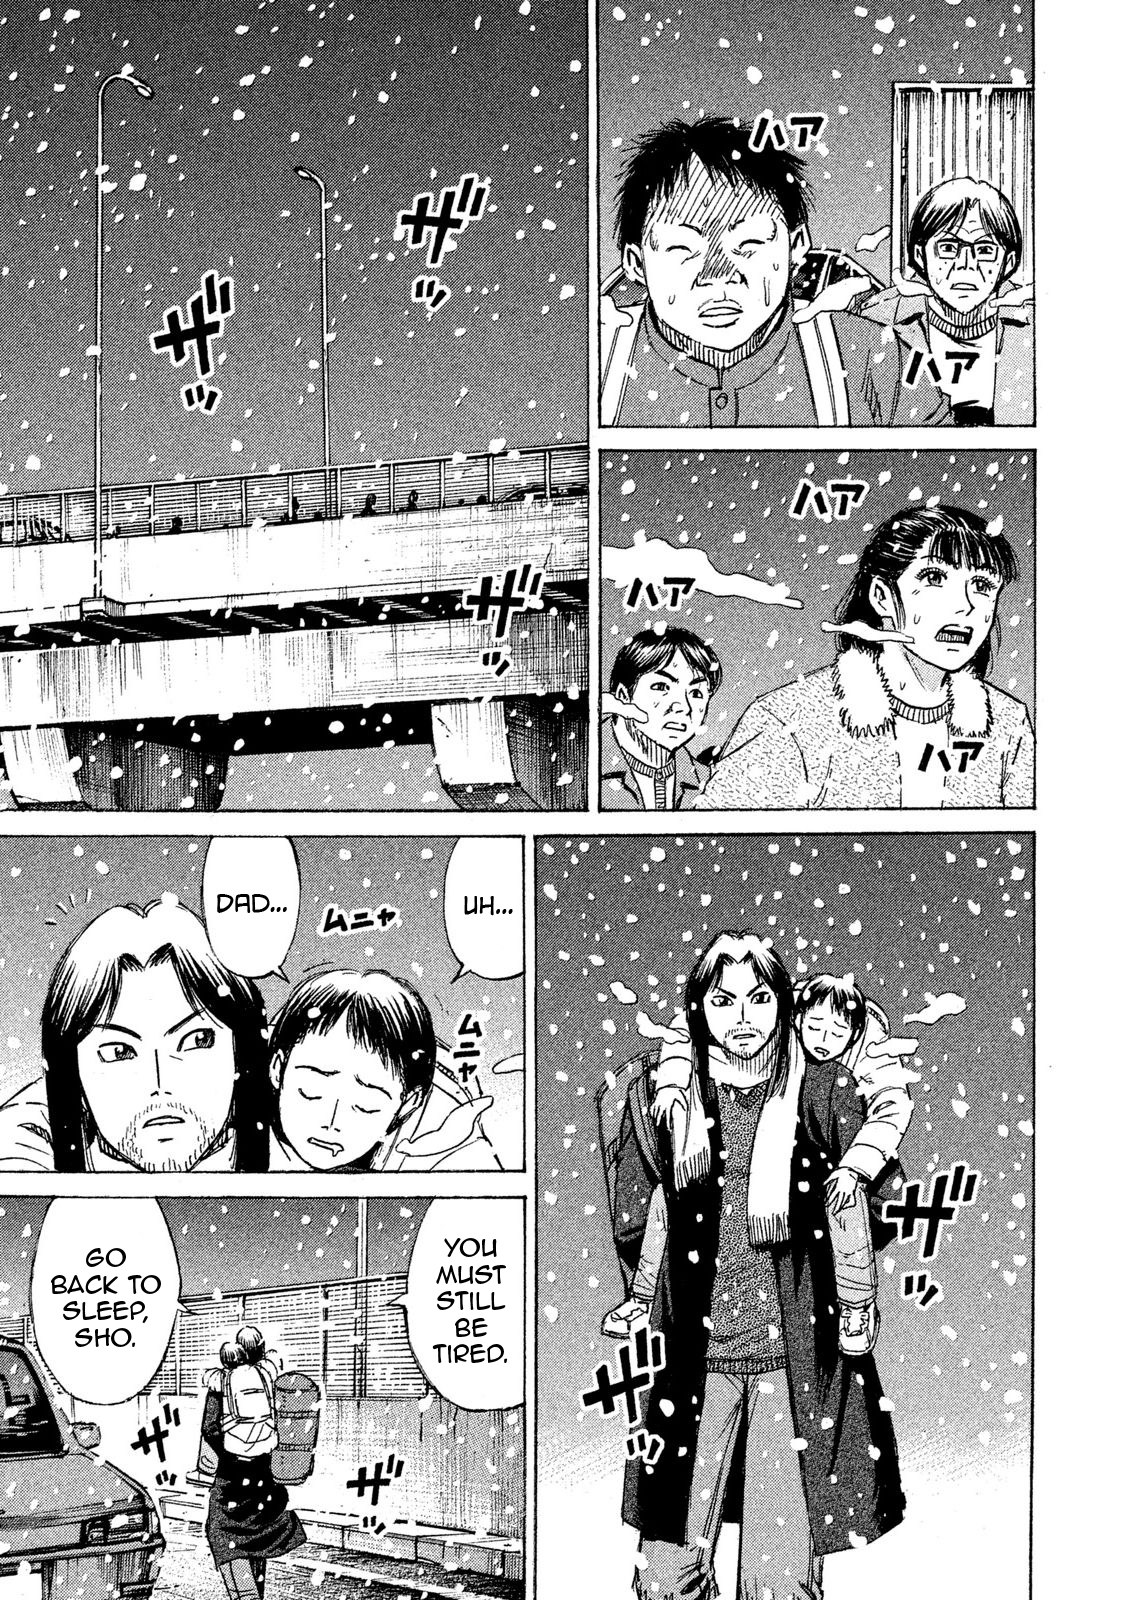 Higanjima - 48 Days Later - Page 4